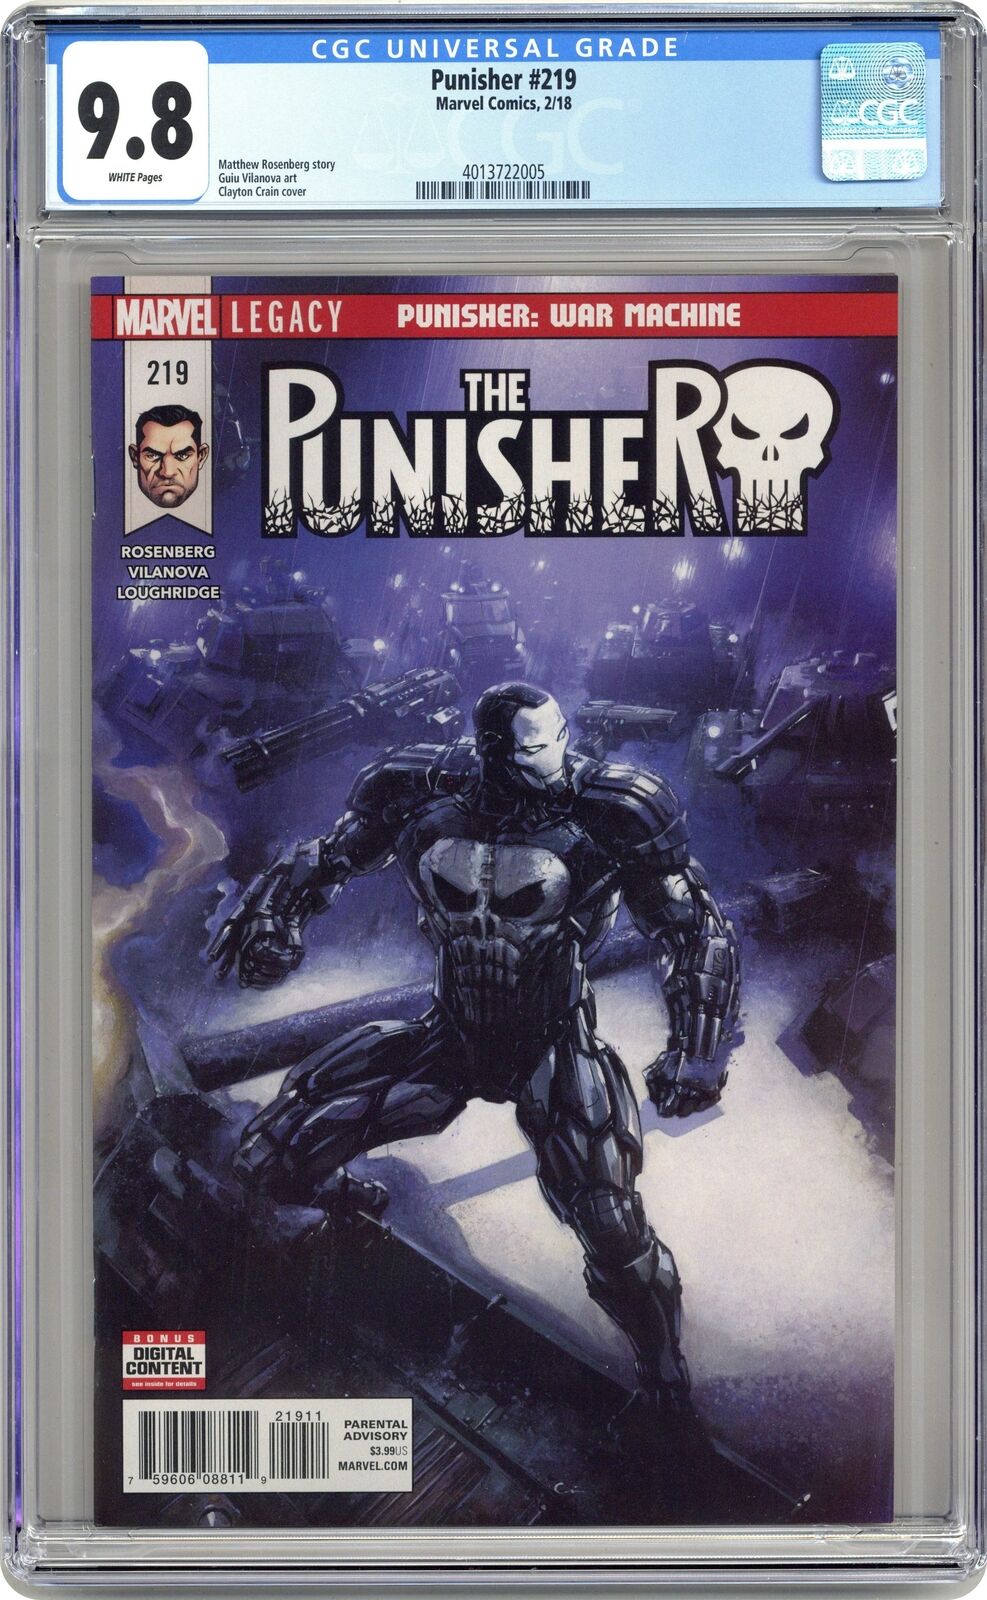 Punisher #219A Crain CGC 9.8 2018 4013722005